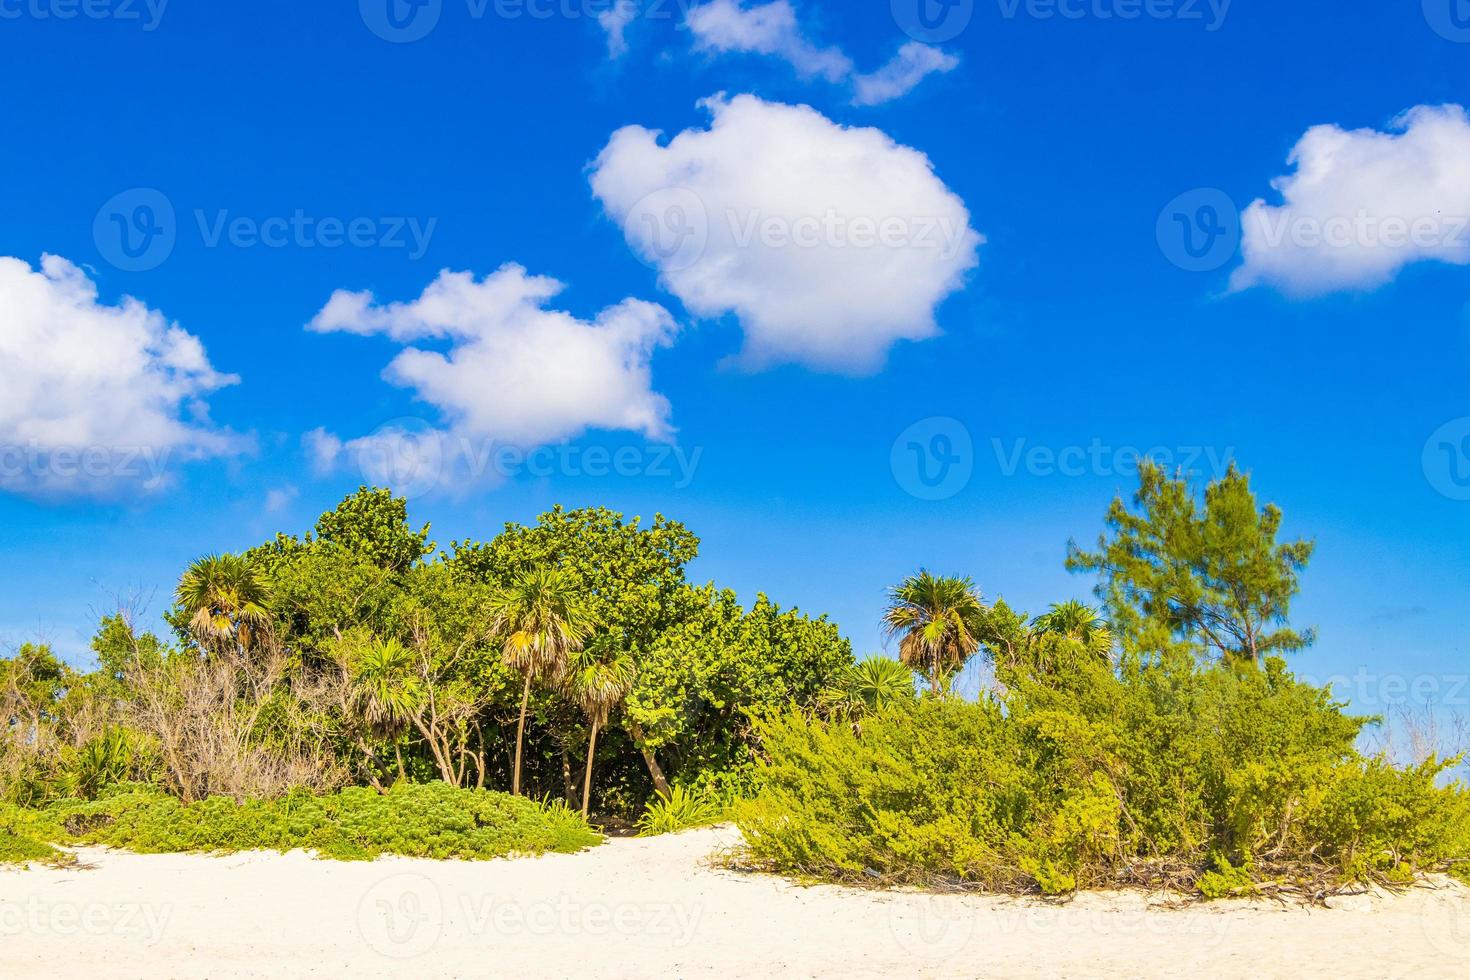 caraïben strand Spar palm bomen in oerwoud Woud natuur Mexico. foto